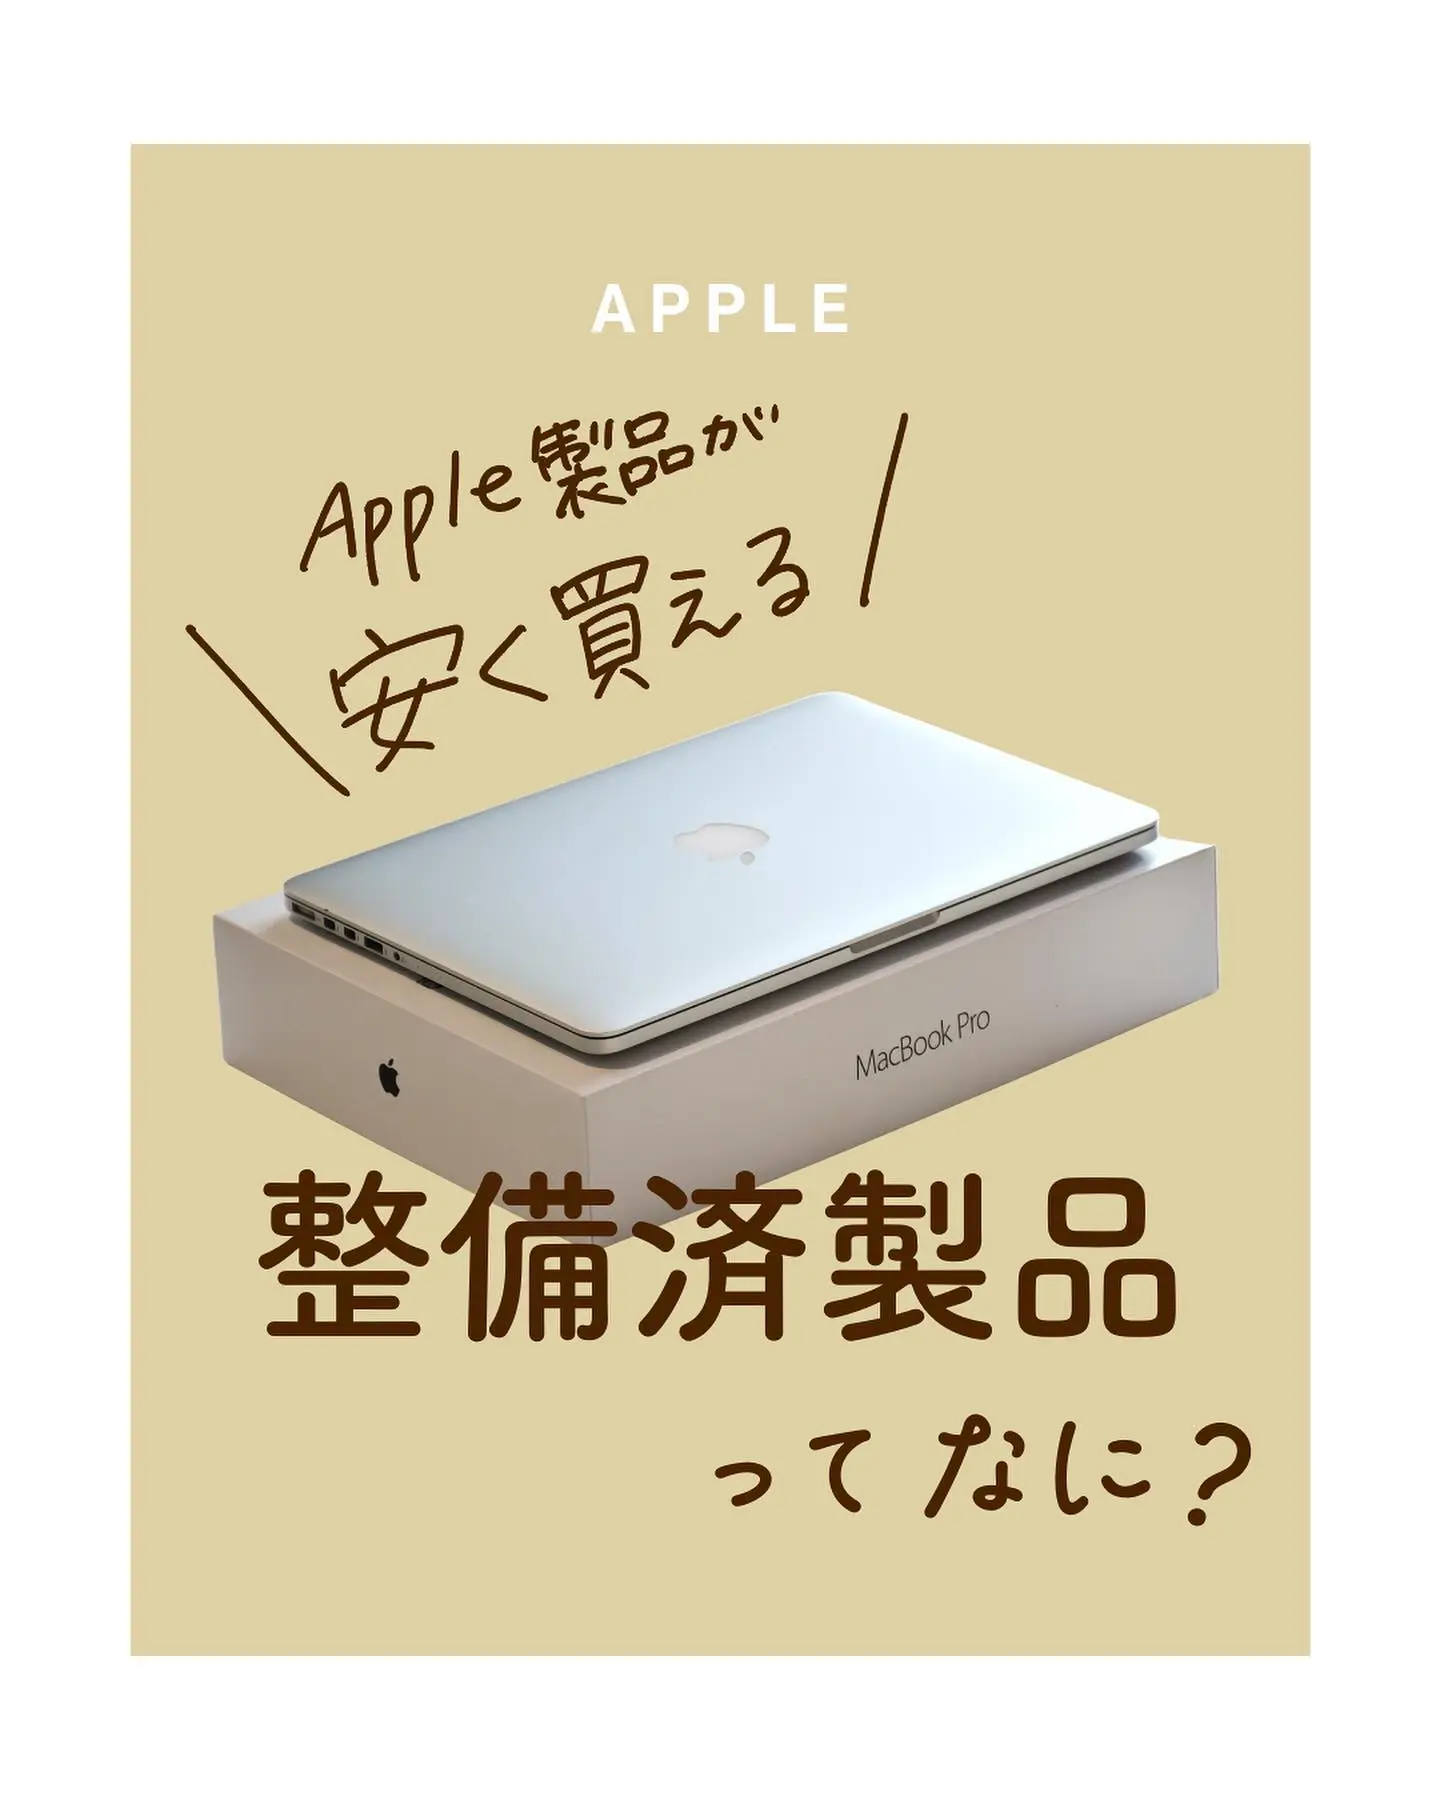 Macbook お得に購入 - Lemon8検索